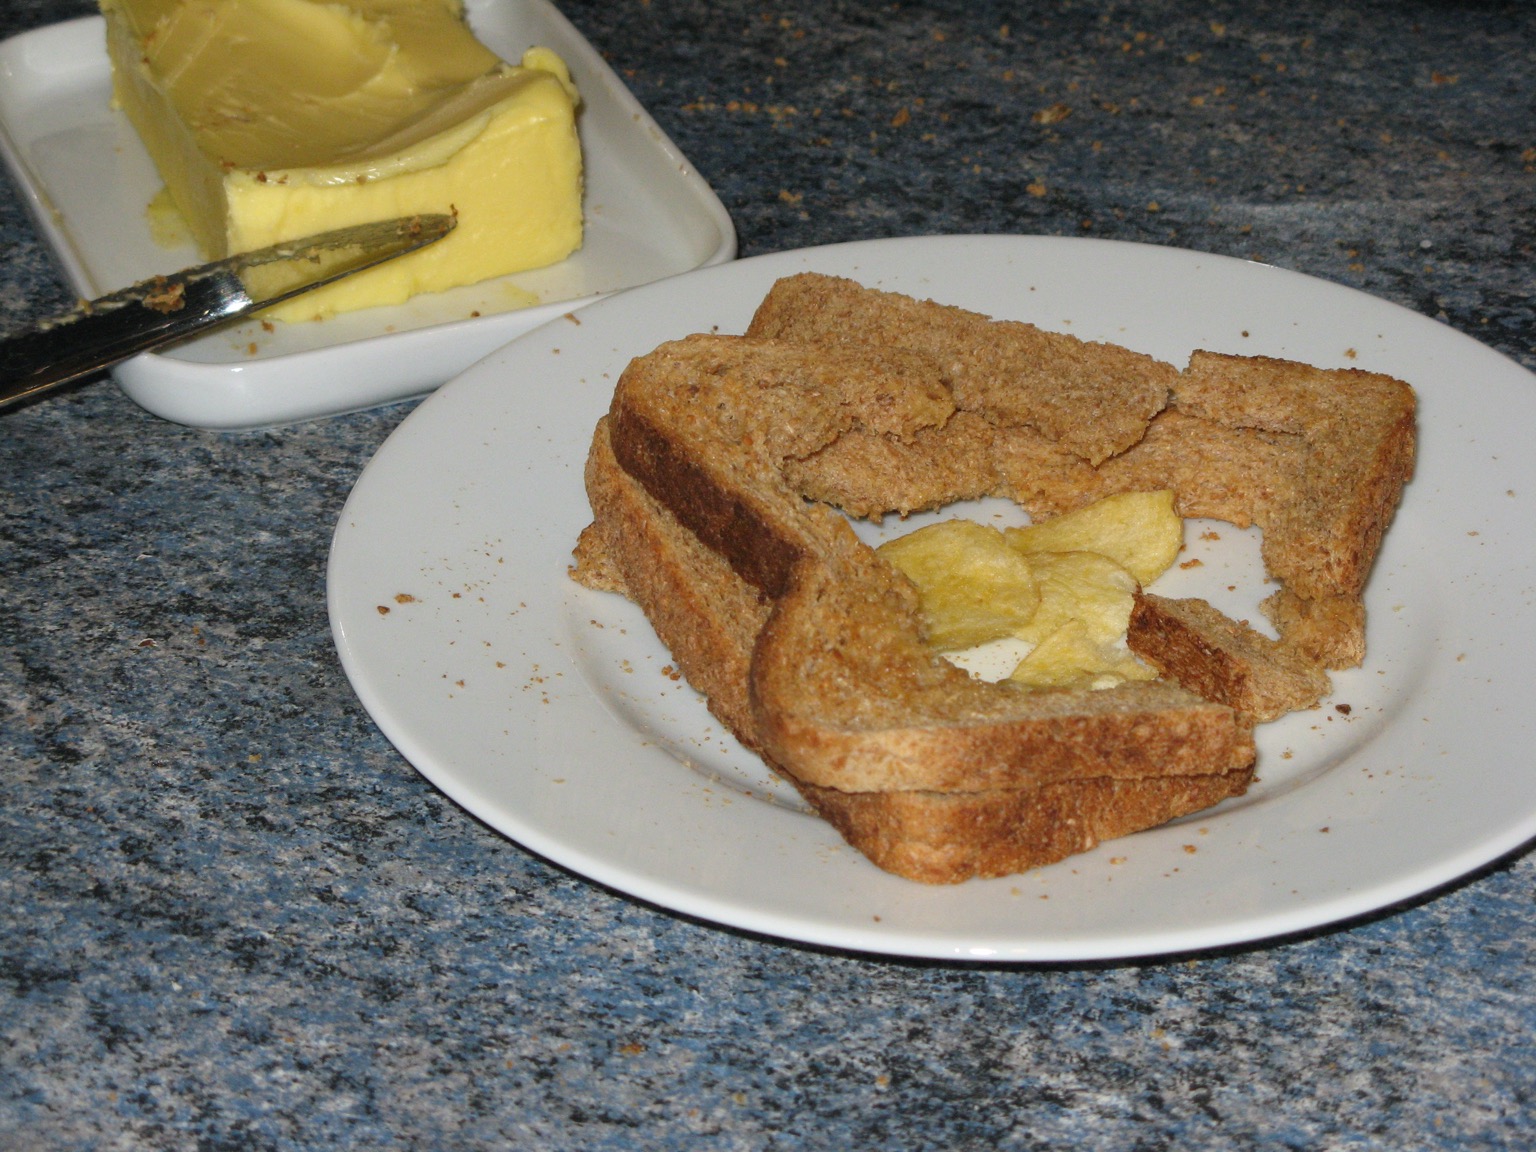 Remnants of a brown crisp sandwich